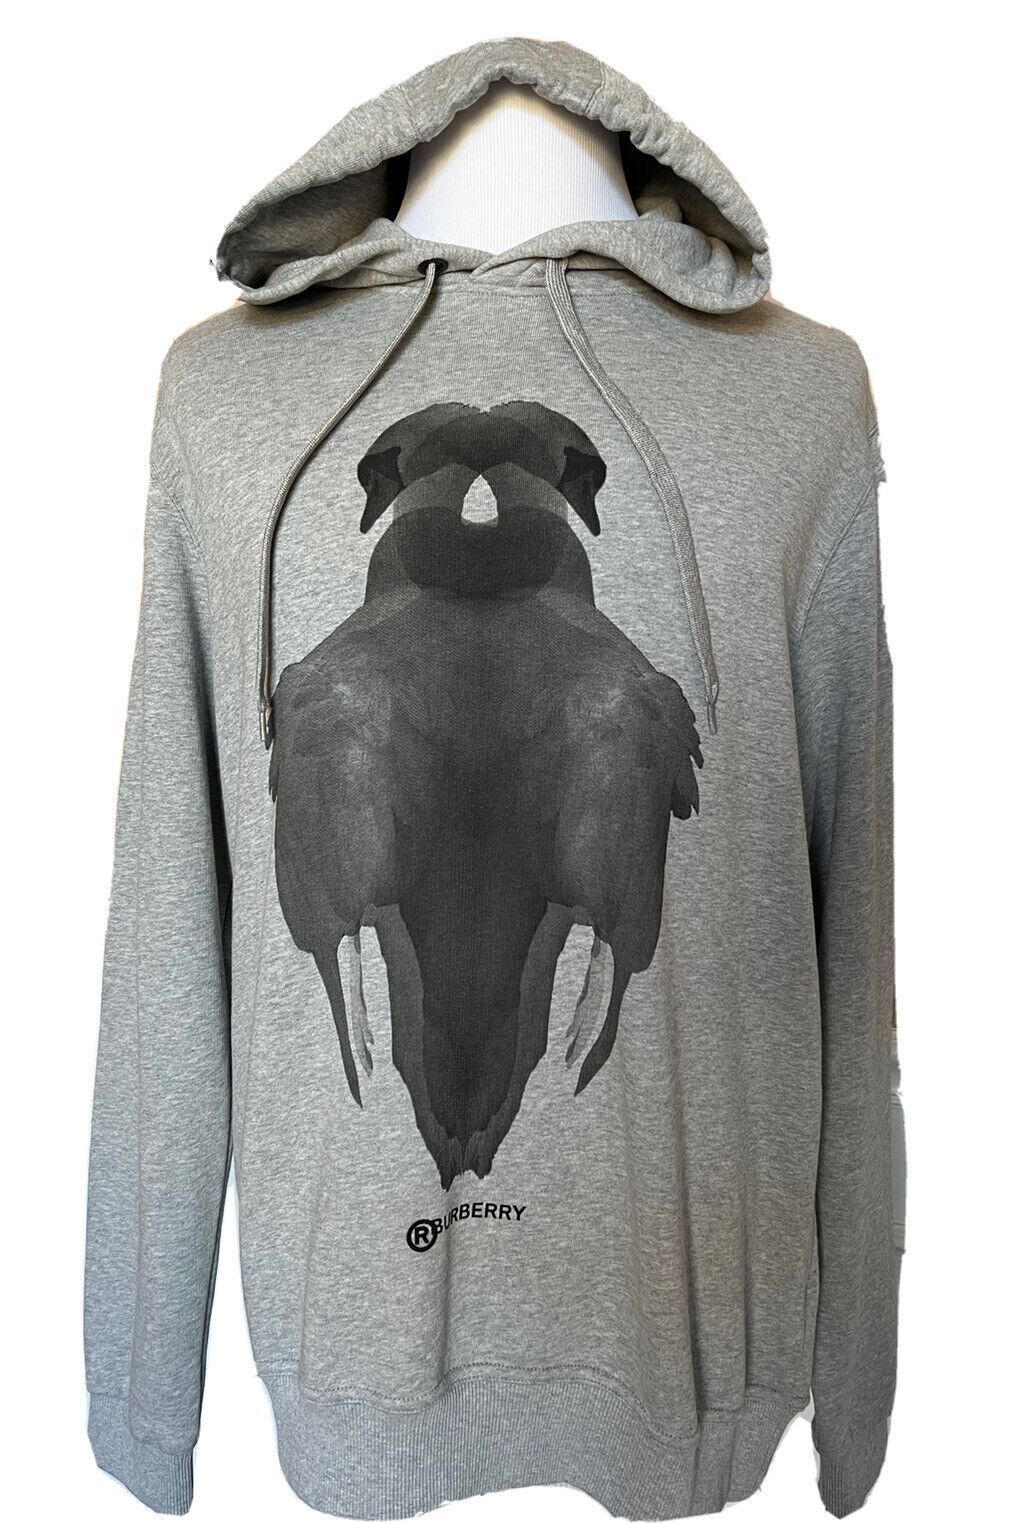 Neu mit Etikett: 650 $ Burberry Swanley Grey Montage Print Sweatshirt mit Kapuze L Portugal 